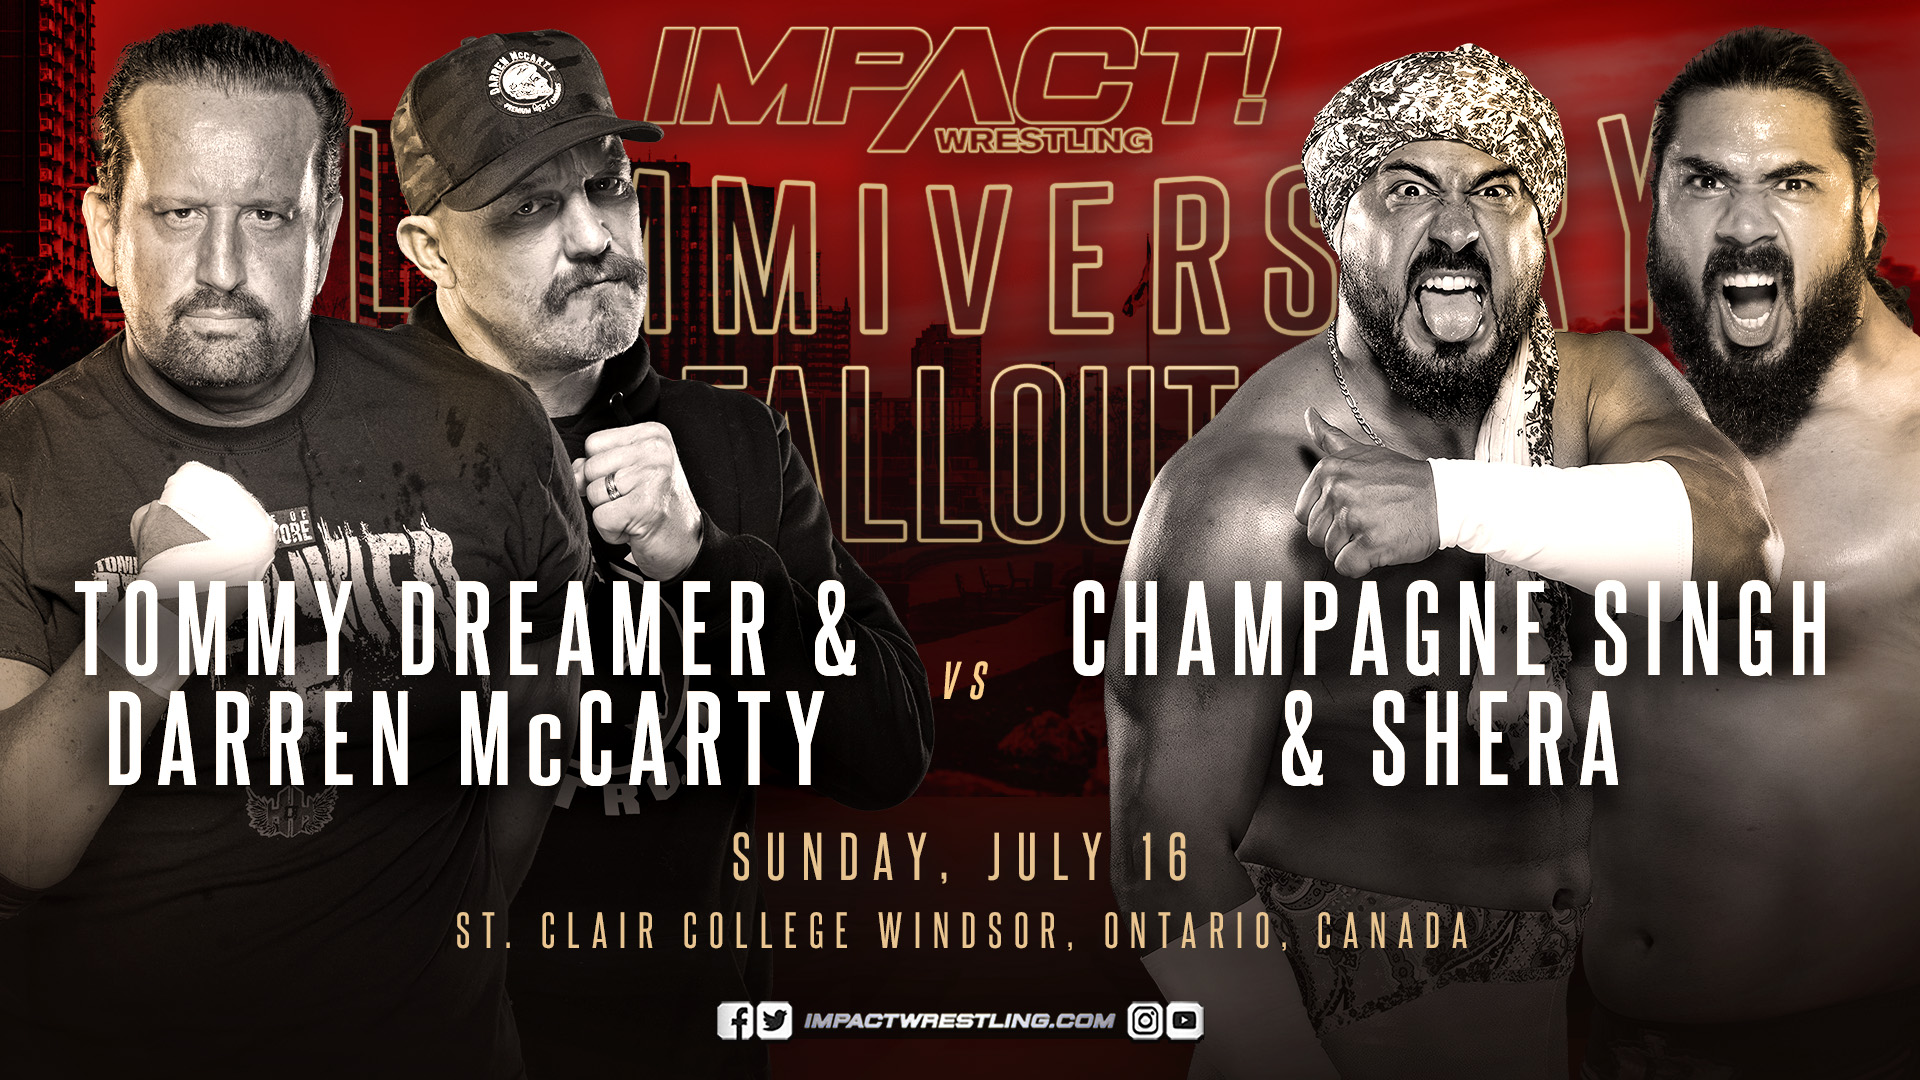 Darren McCarty & Tommy Dreamer vs Champagne Singh & Shera